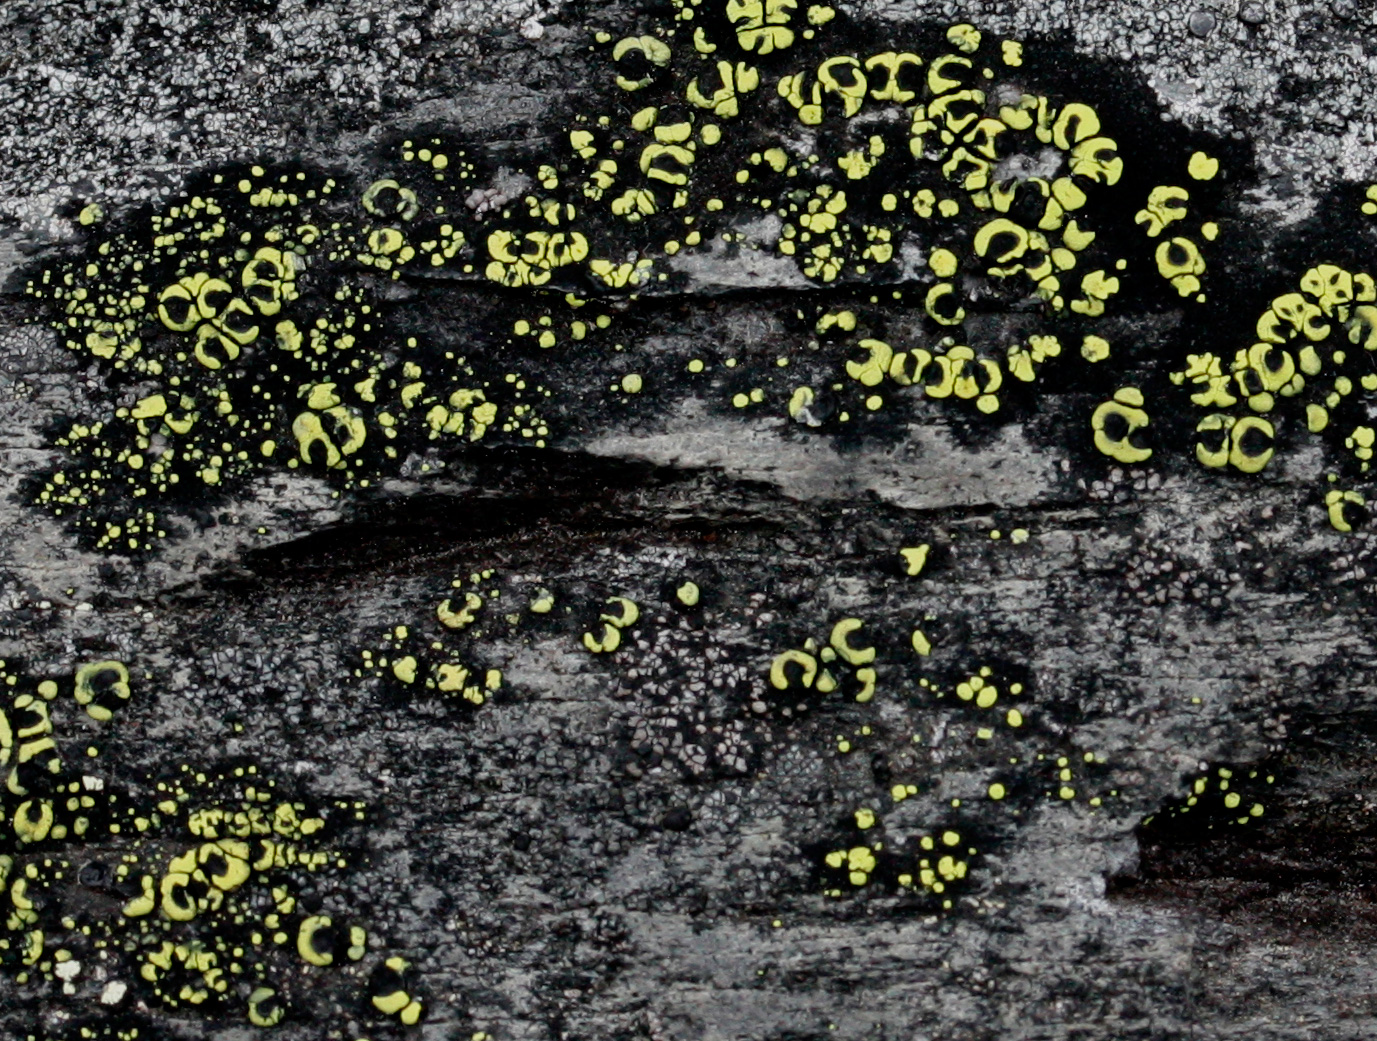 Rhizocarpon lecanorinum lichen